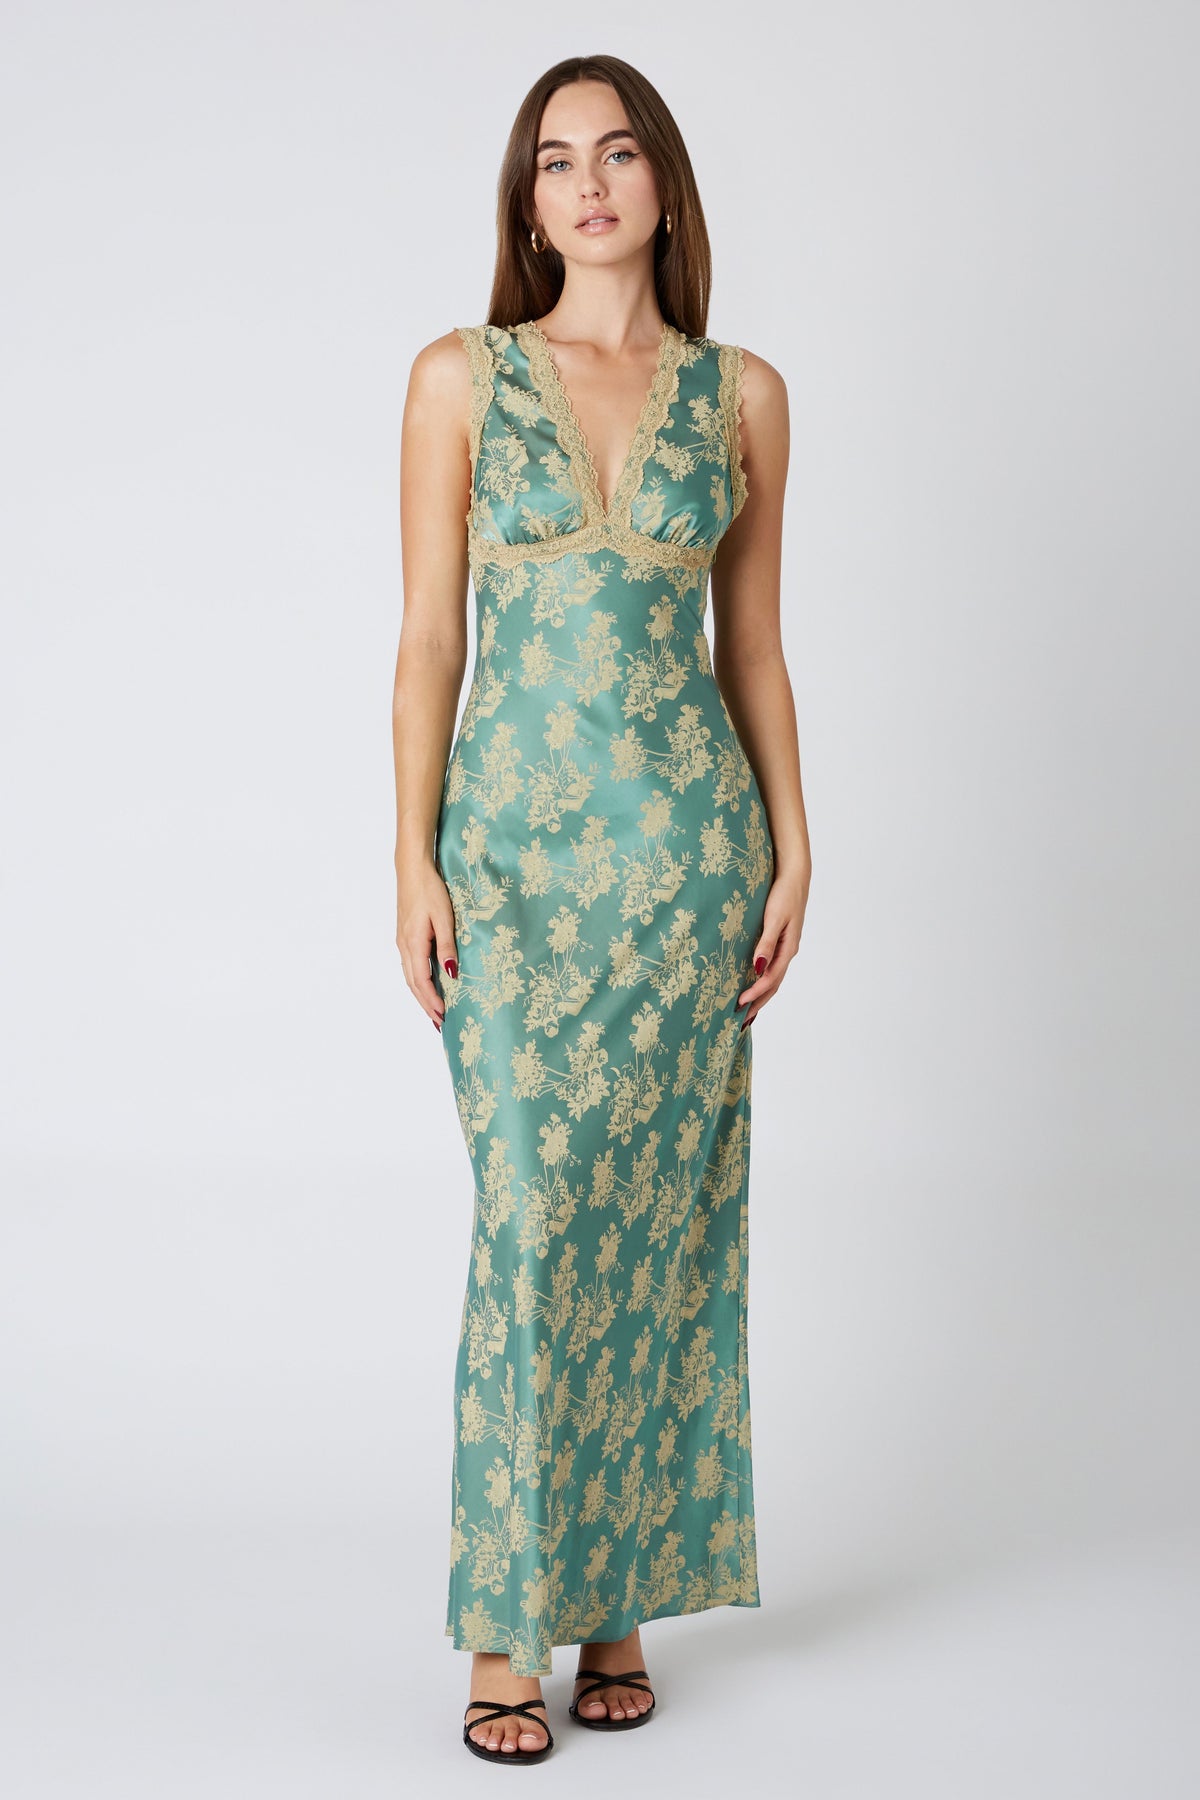 Tabitha 1930s Style Floral Jacquard Lace Trim Slip Maxi Dress - Jade